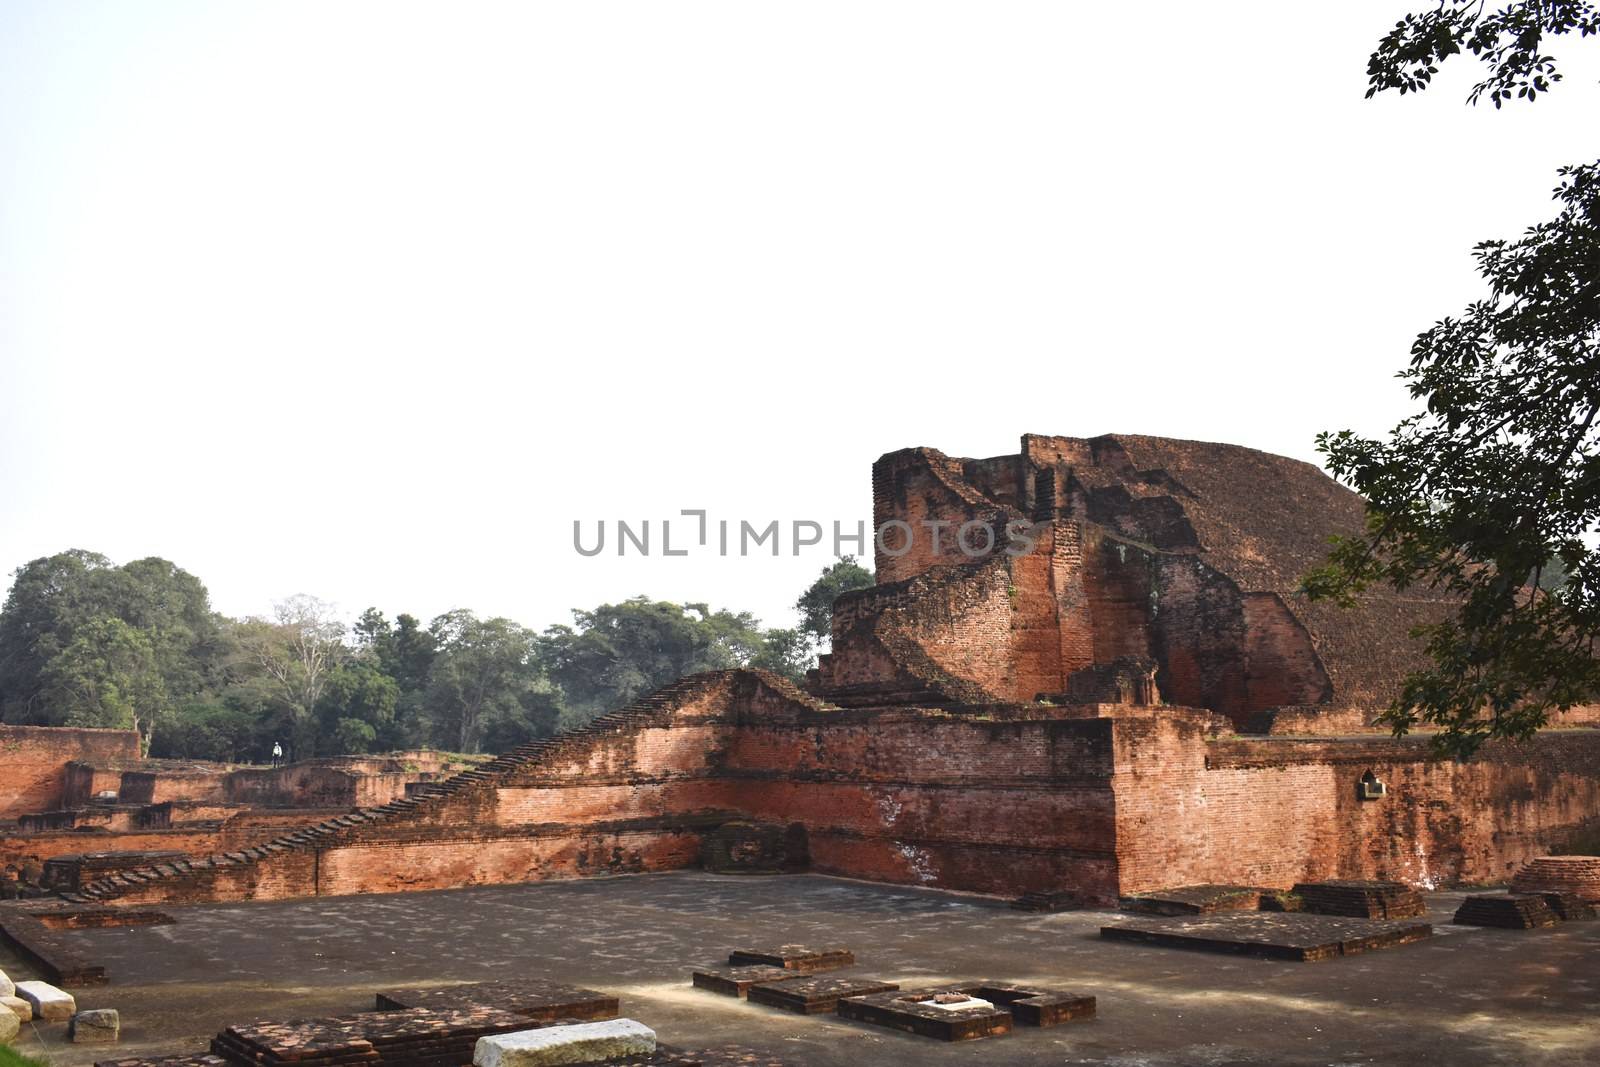 Ruins of Nalanda University at Nalanda, Bihar in India by ravindrabhu165165@gmail.com